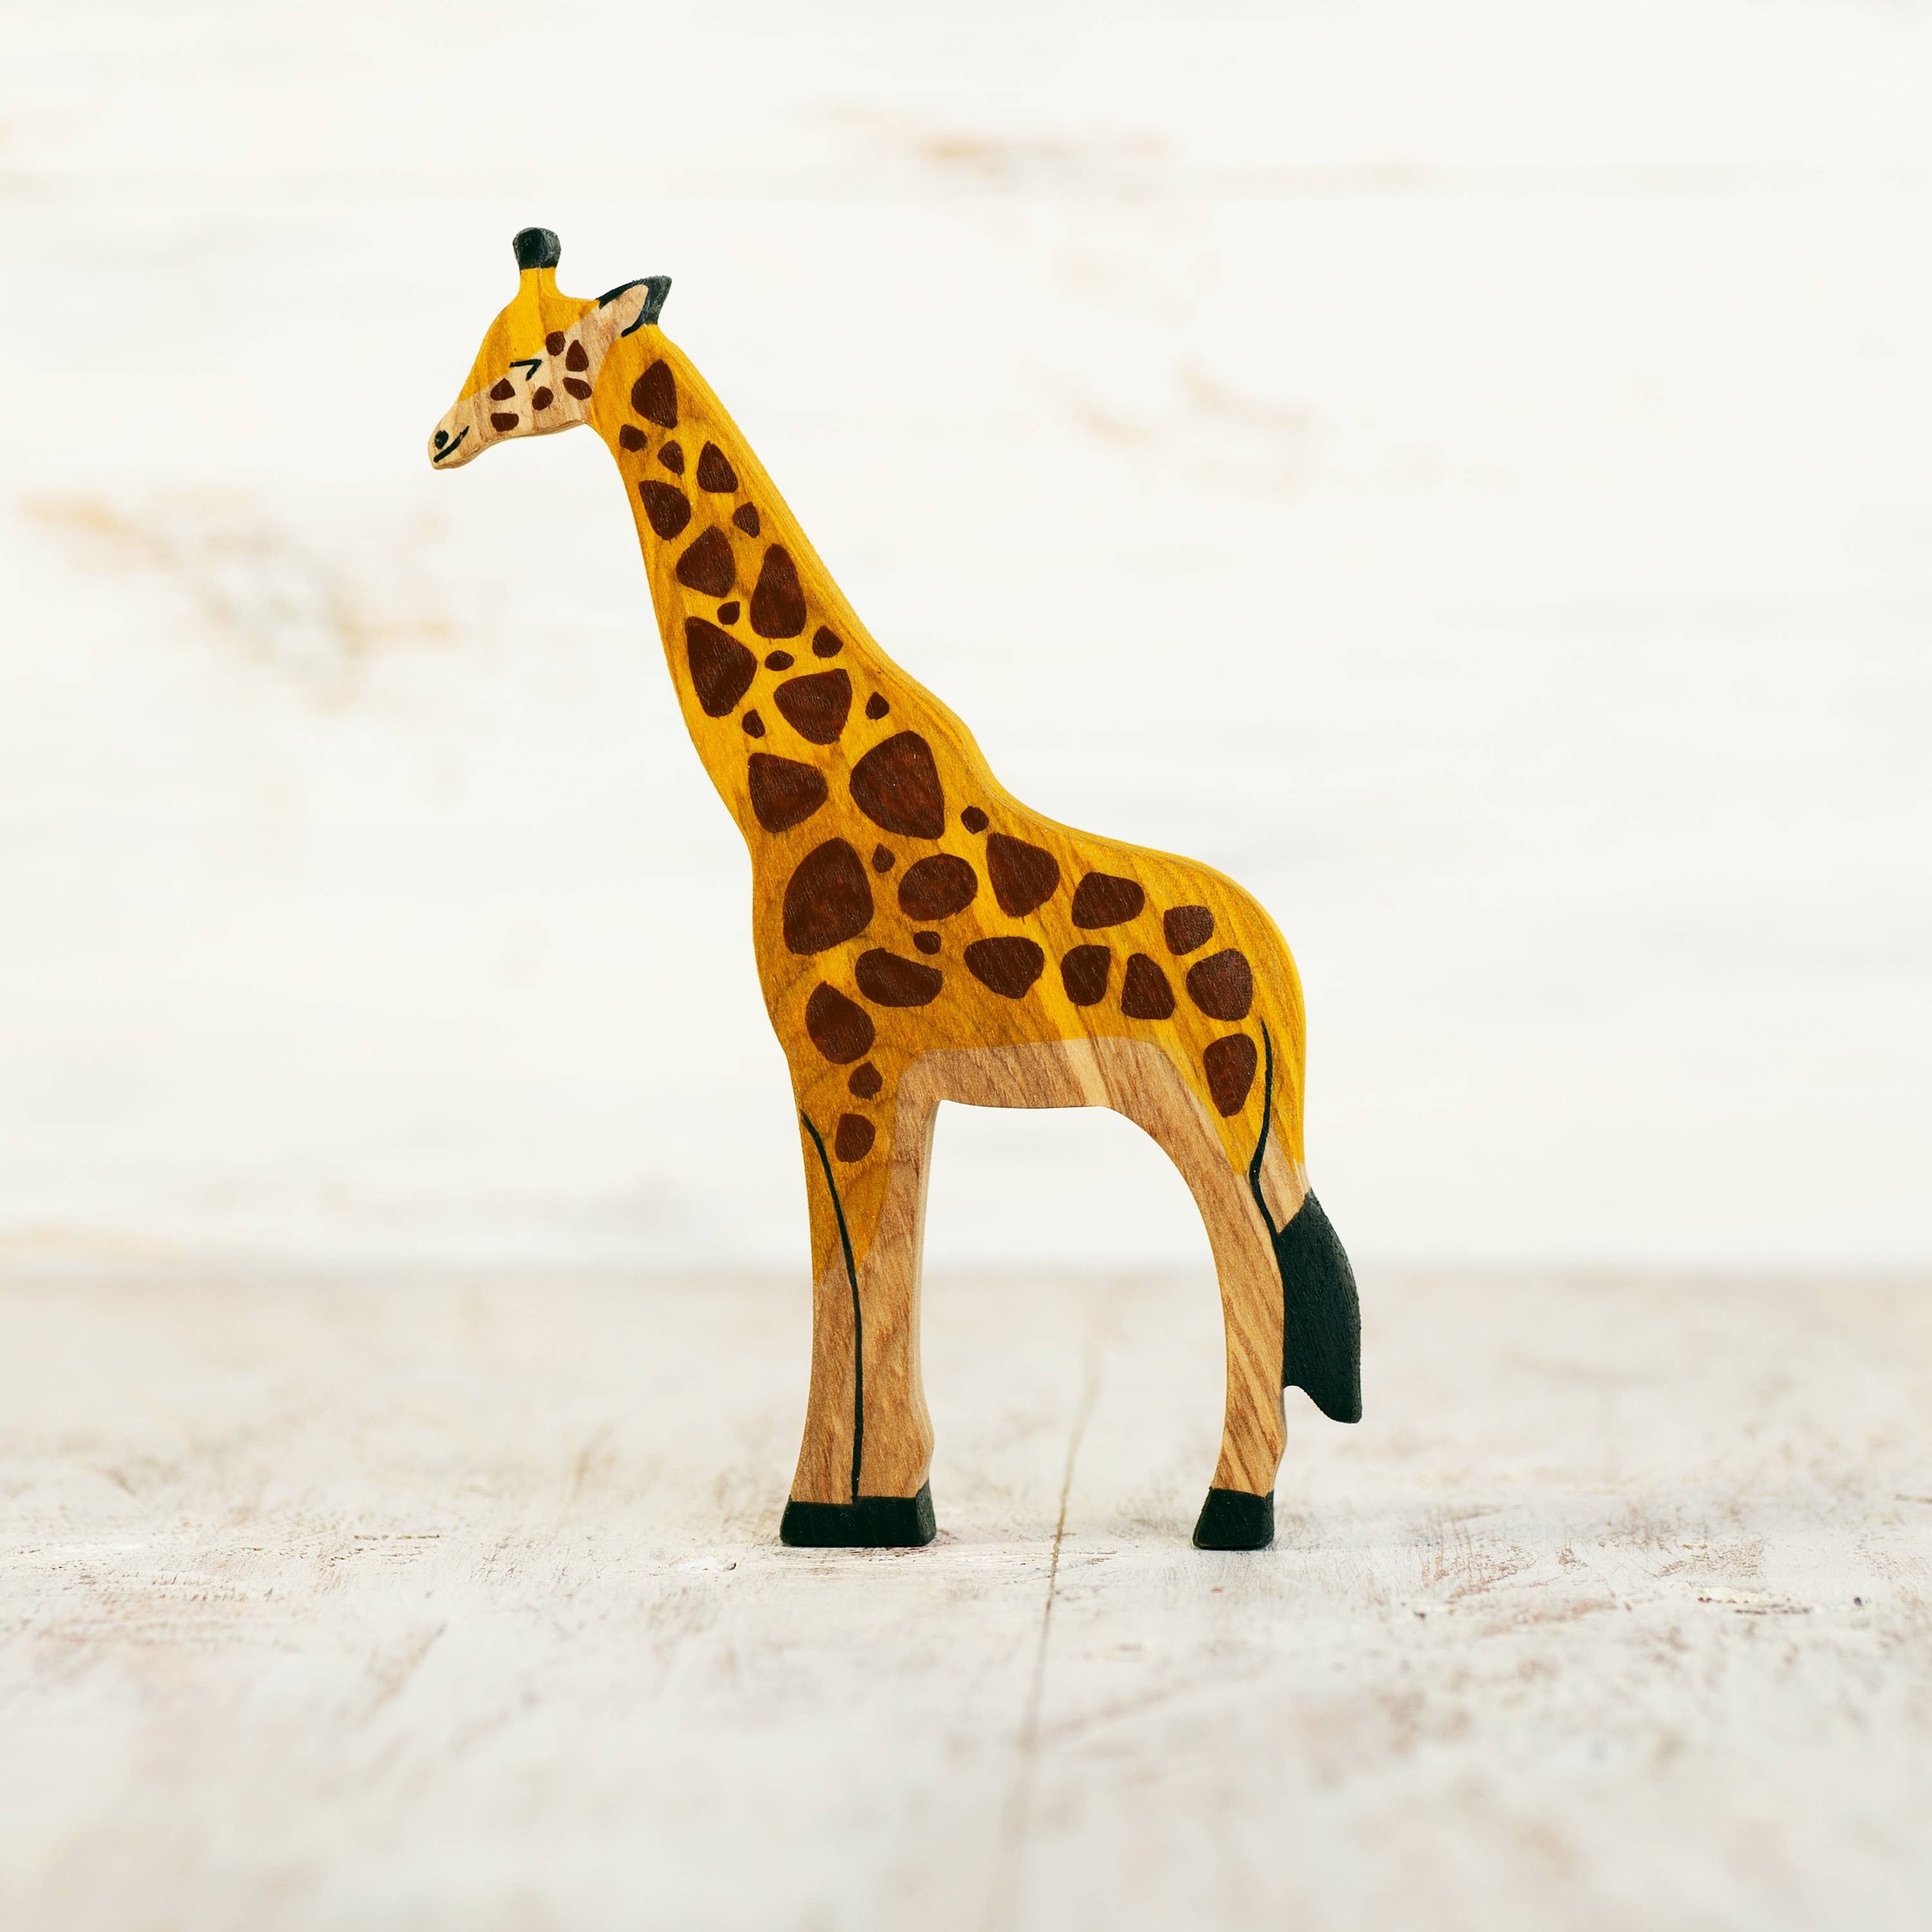 Wooden toy Giraffe figurine Safari animal toy African animal